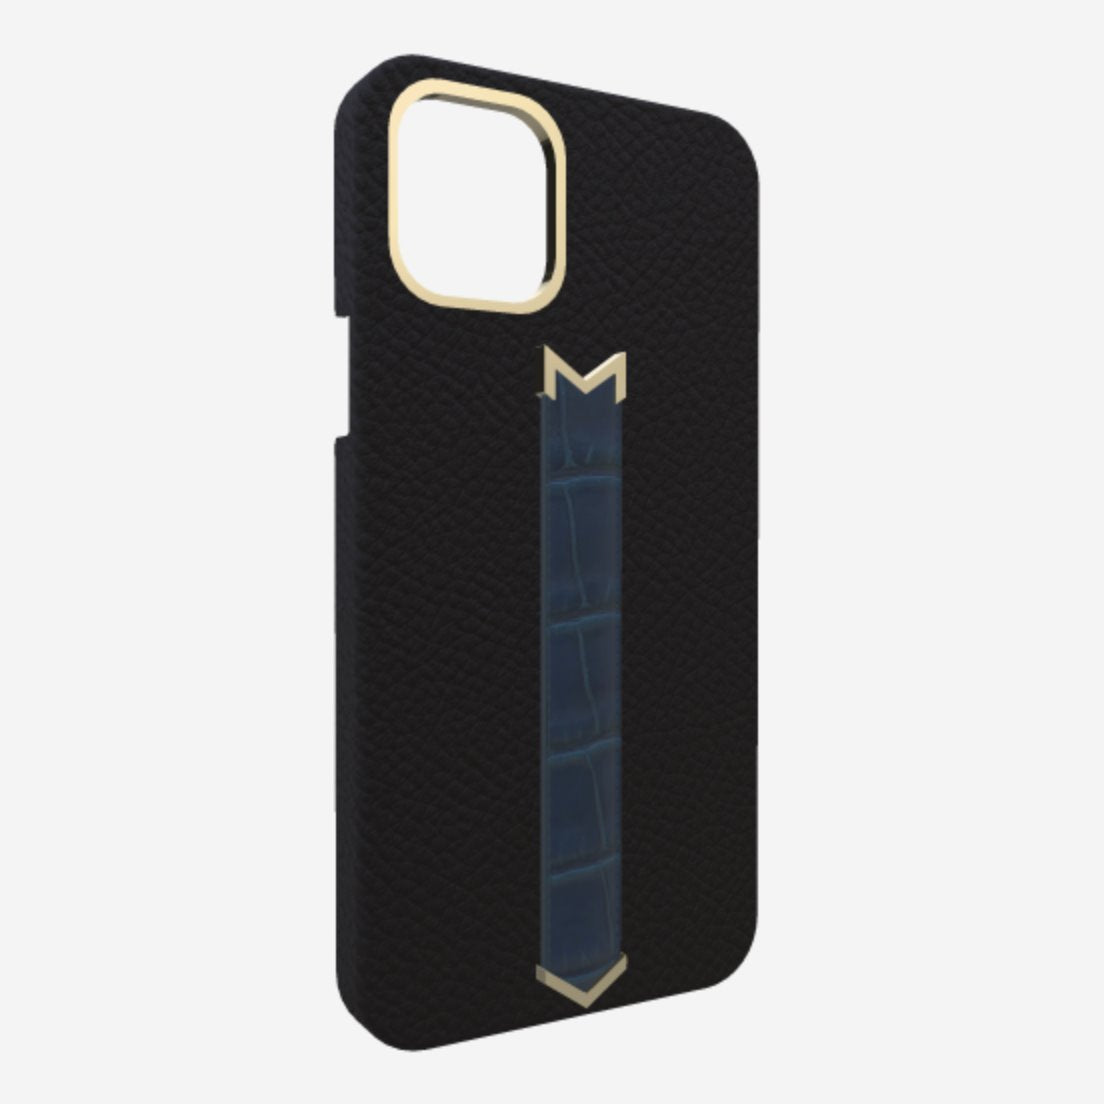 Gold Finger Strap Case for iPhone 13 Pro Max in Genuine Calfskin and Alligator Bond Black Night Blue 